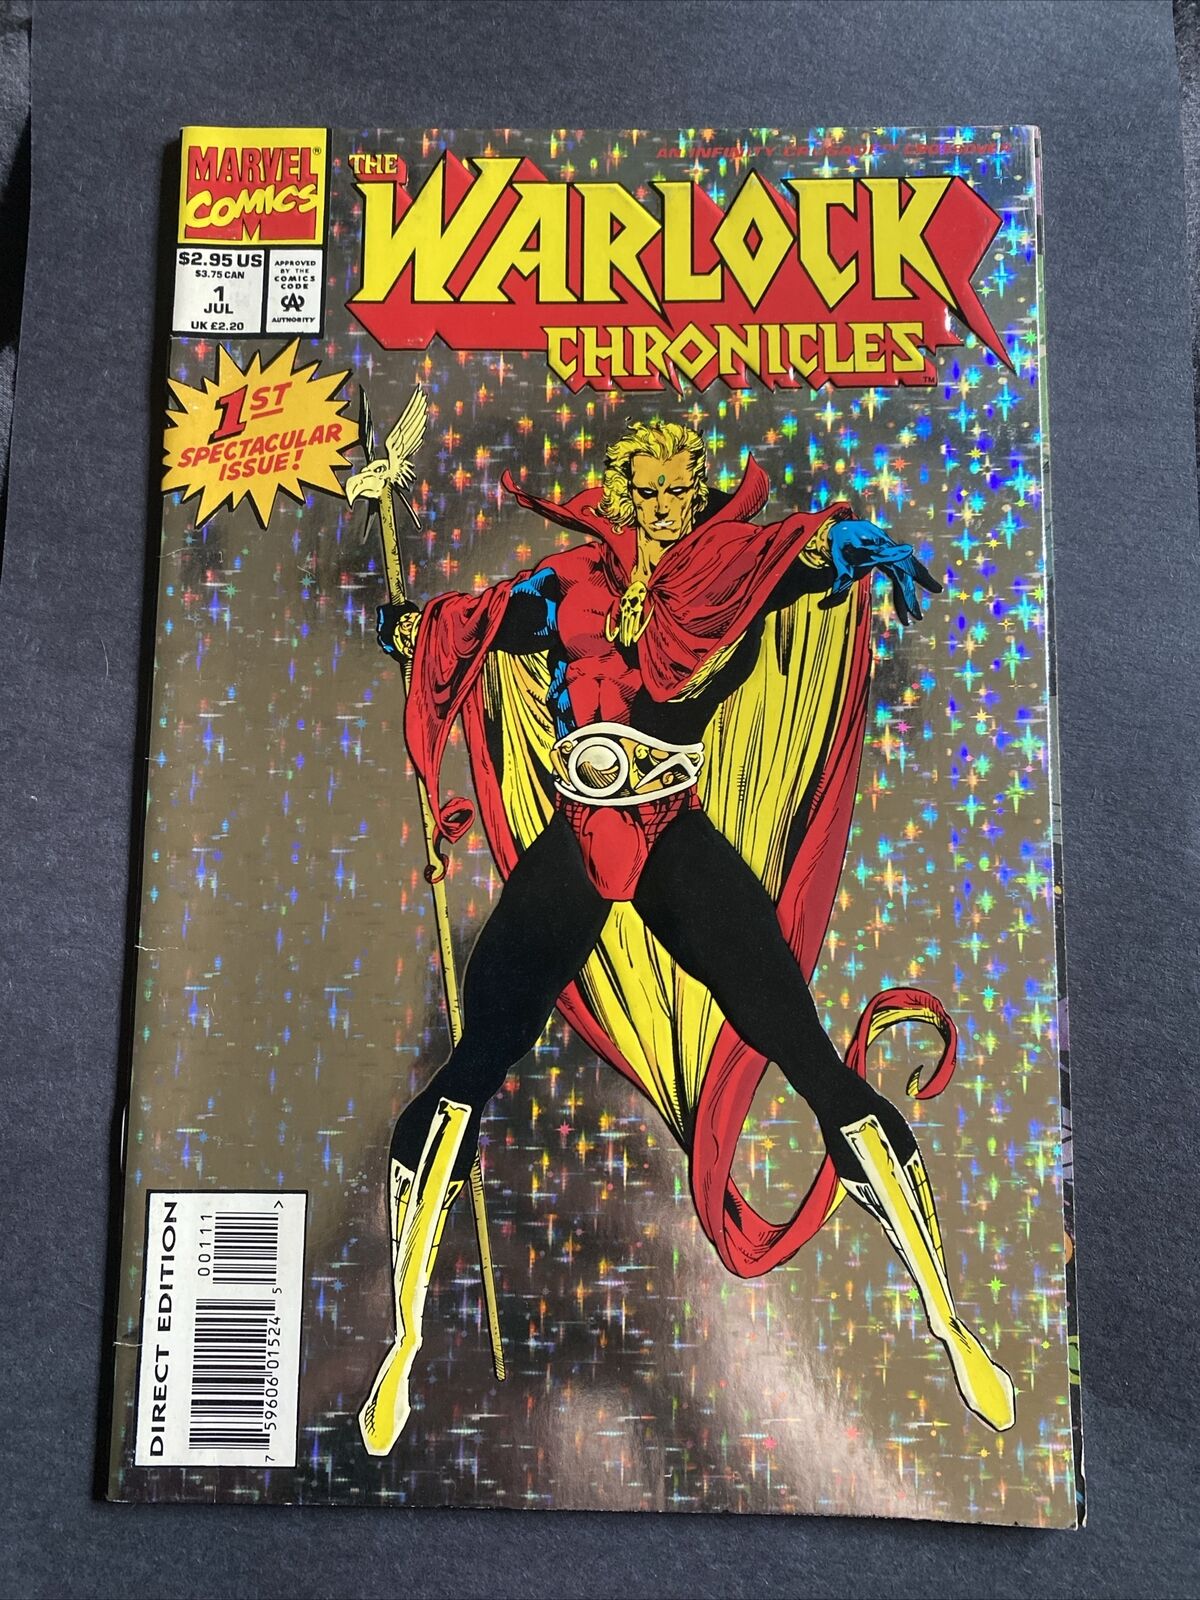 Warlock Chronicles #1 (Marvel Comics July 1993)